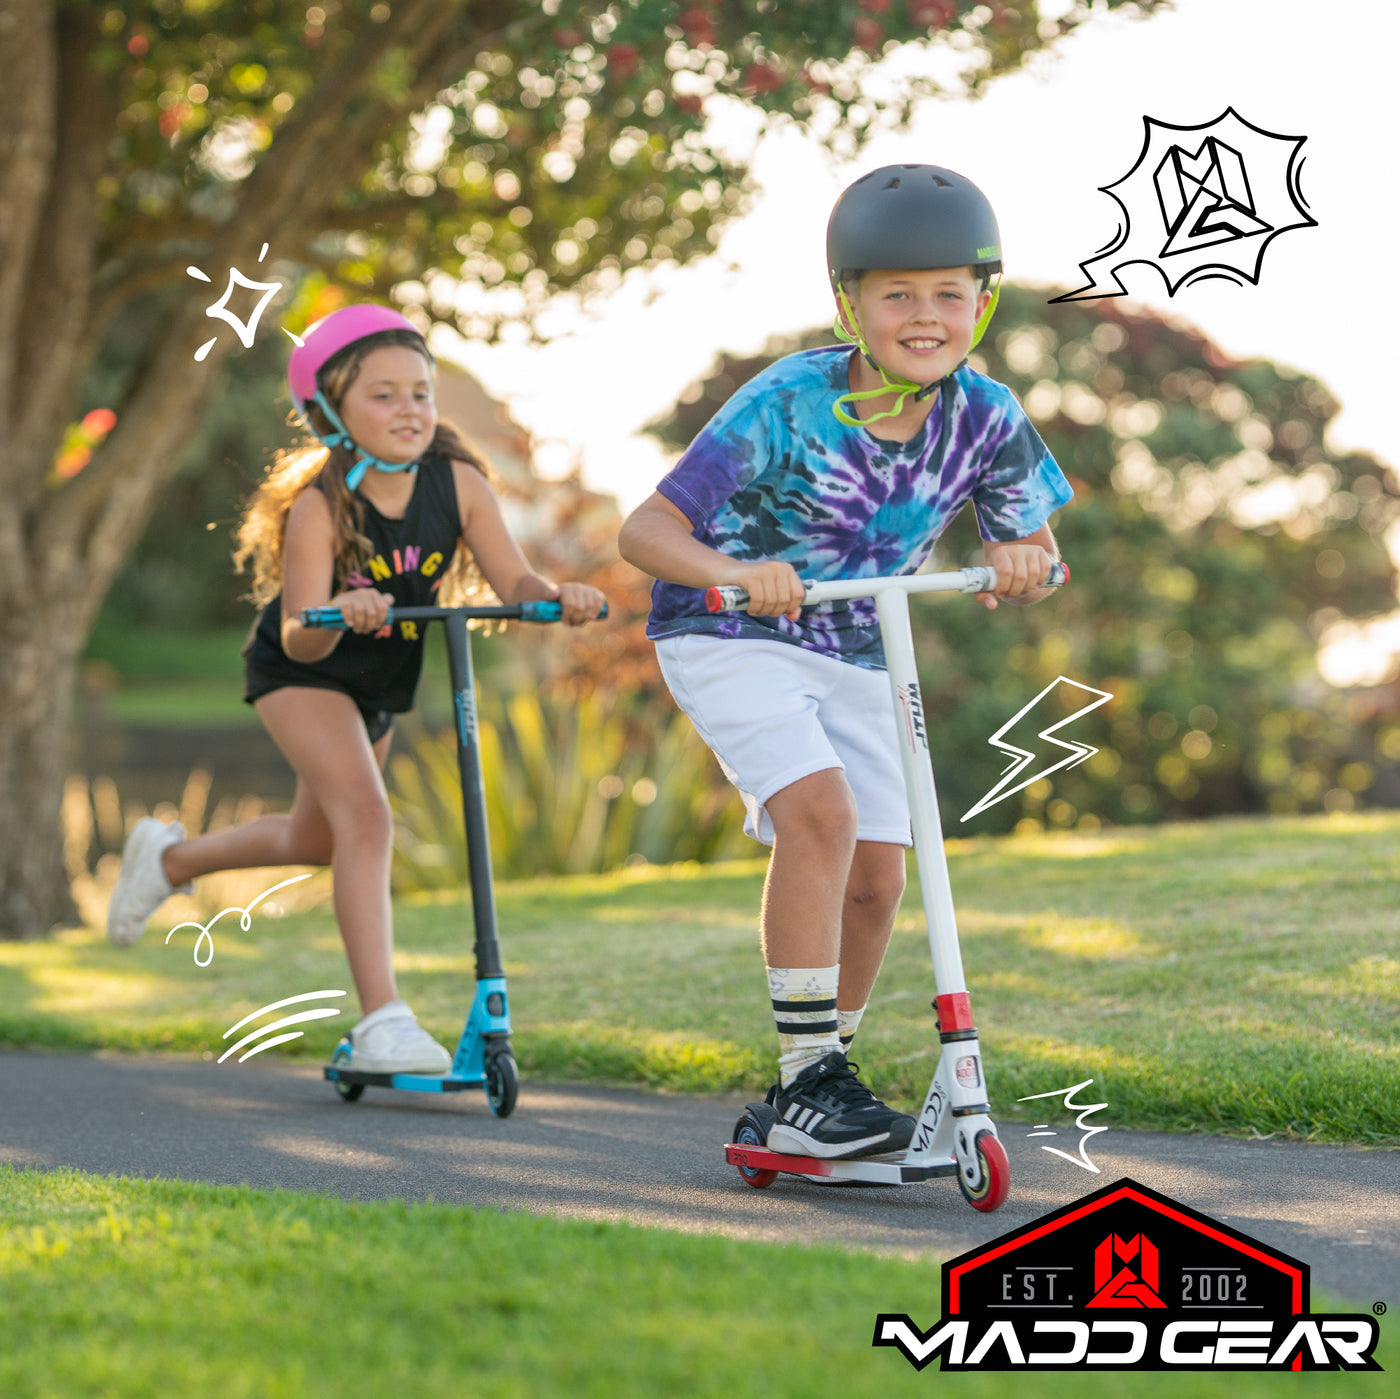 Madd Gear Pro Carve Razor Stunt Trick Scooter Kick Kids Red Skate Park Children